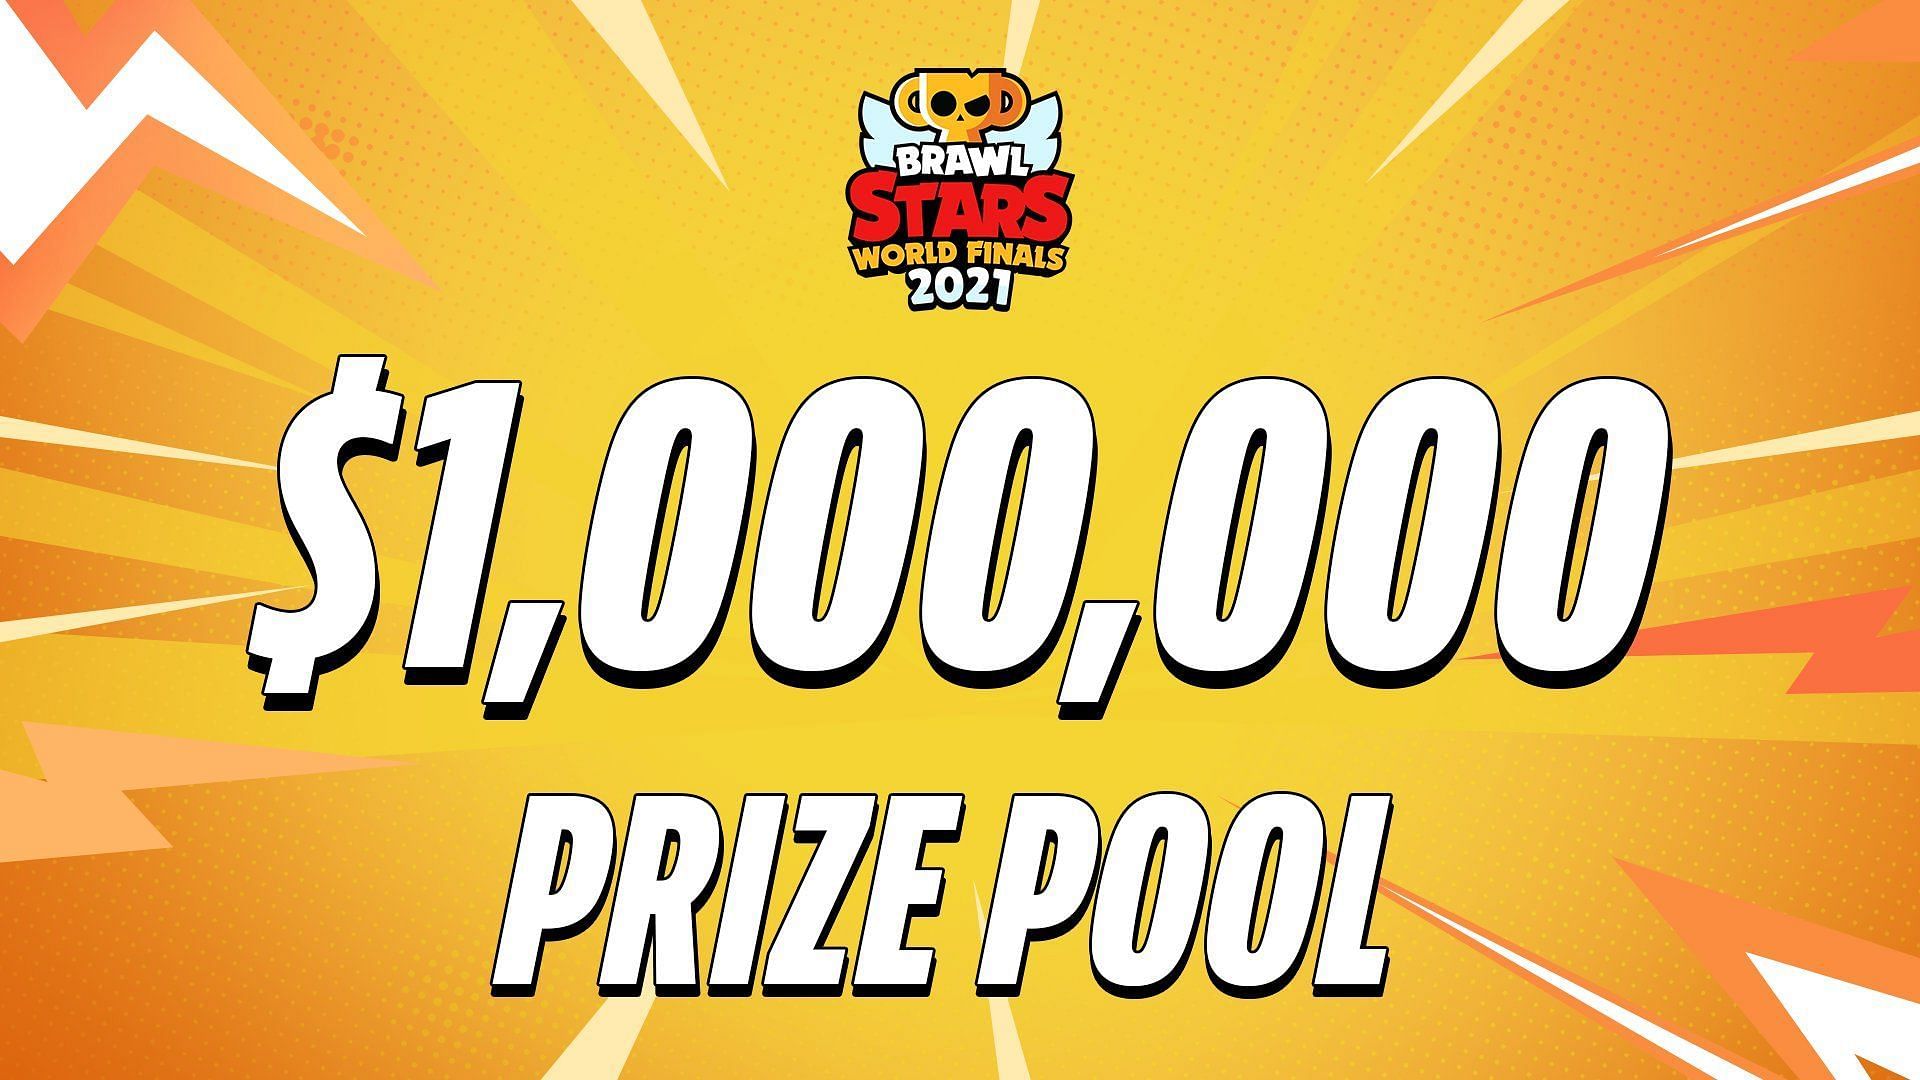 Brawl Stars World Finals 2021 features a massive prize pool of $1 million (Image via Brawl Stars)